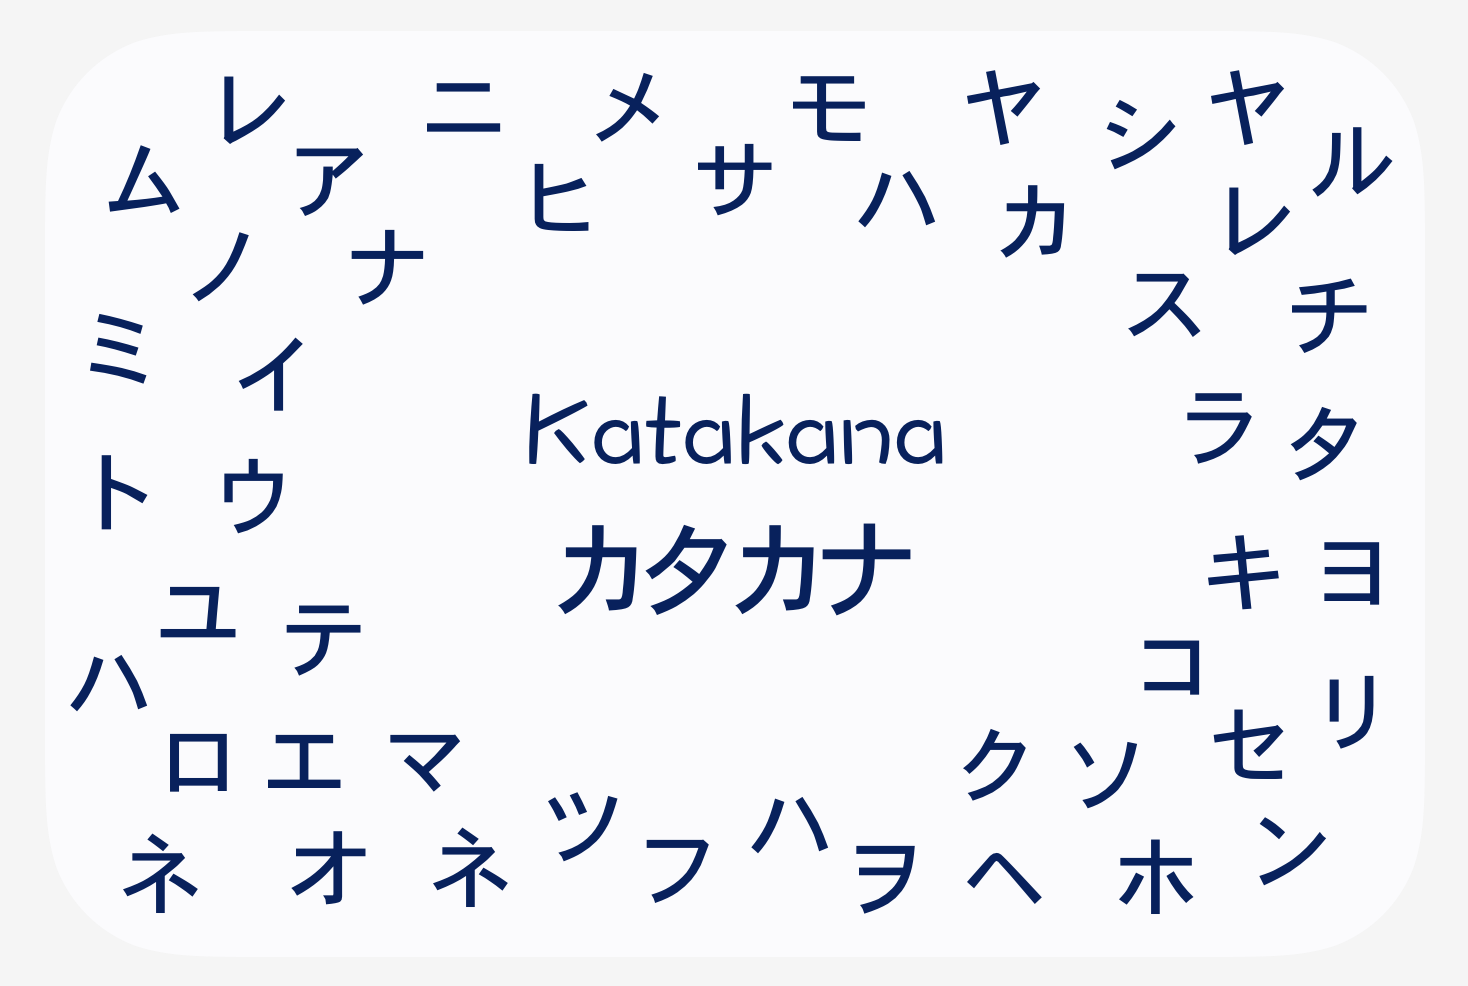 иллюстрации для стима katakana фото 5